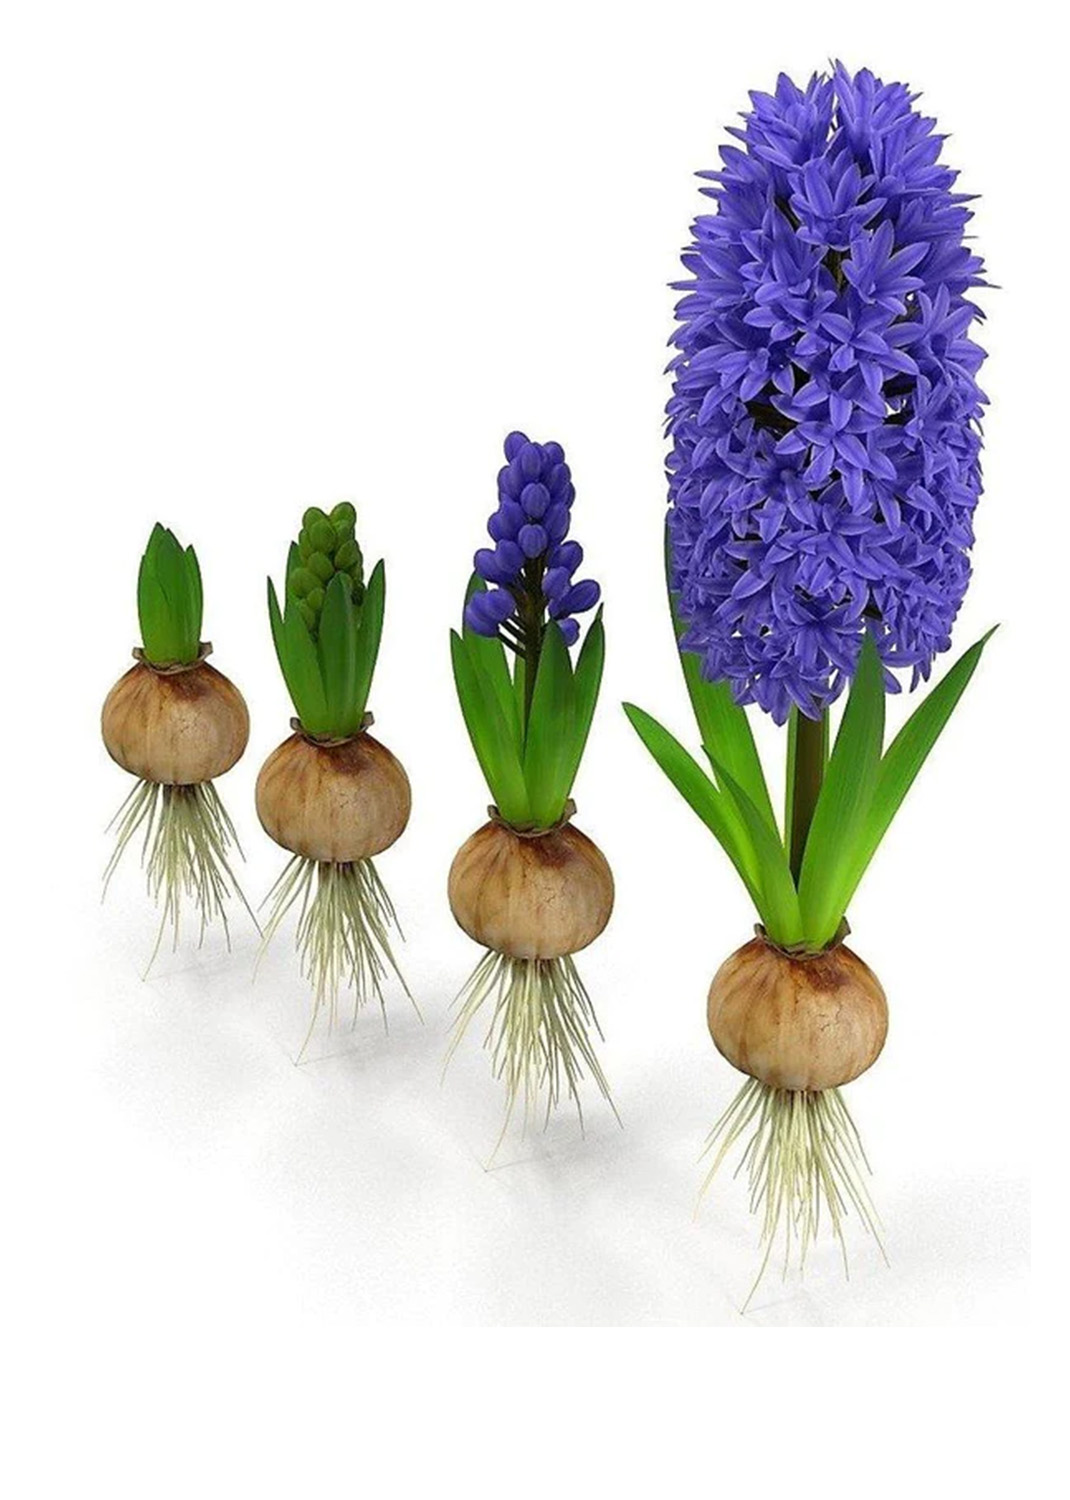 Hyacinth Bulb Fragrance